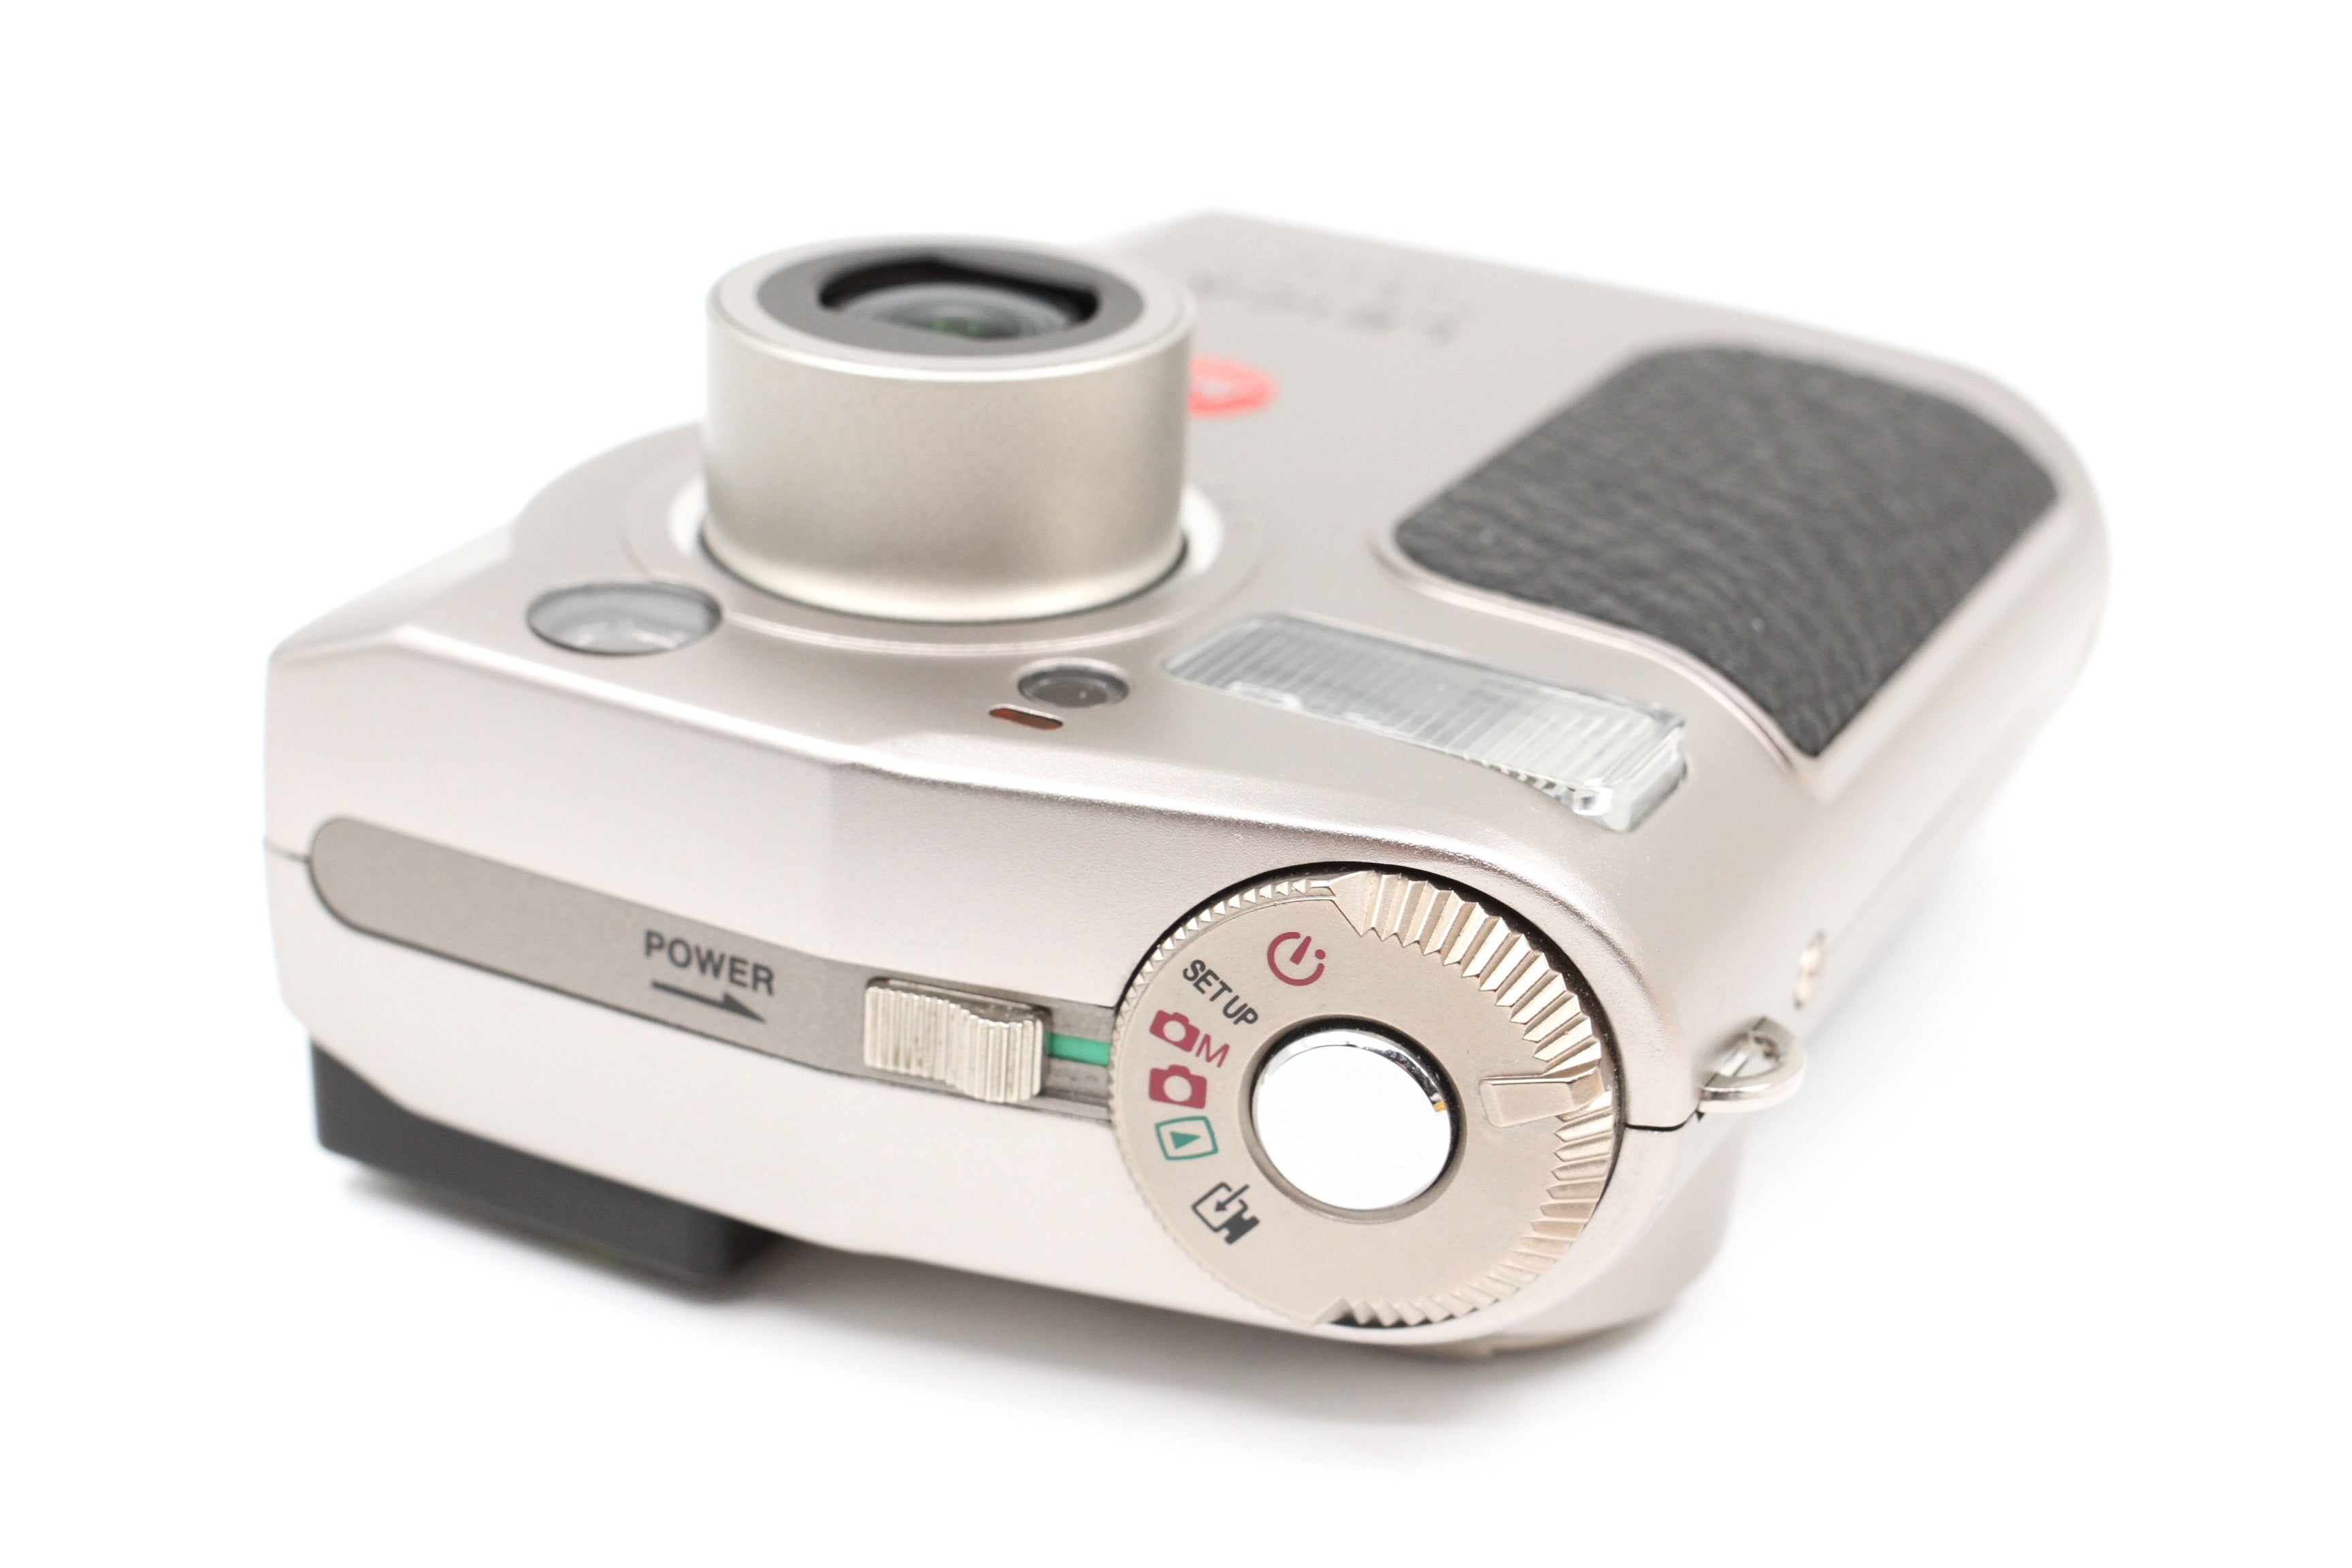 Leica Digilux Zoom 1.27mp Digital Compact Camera, Boxed